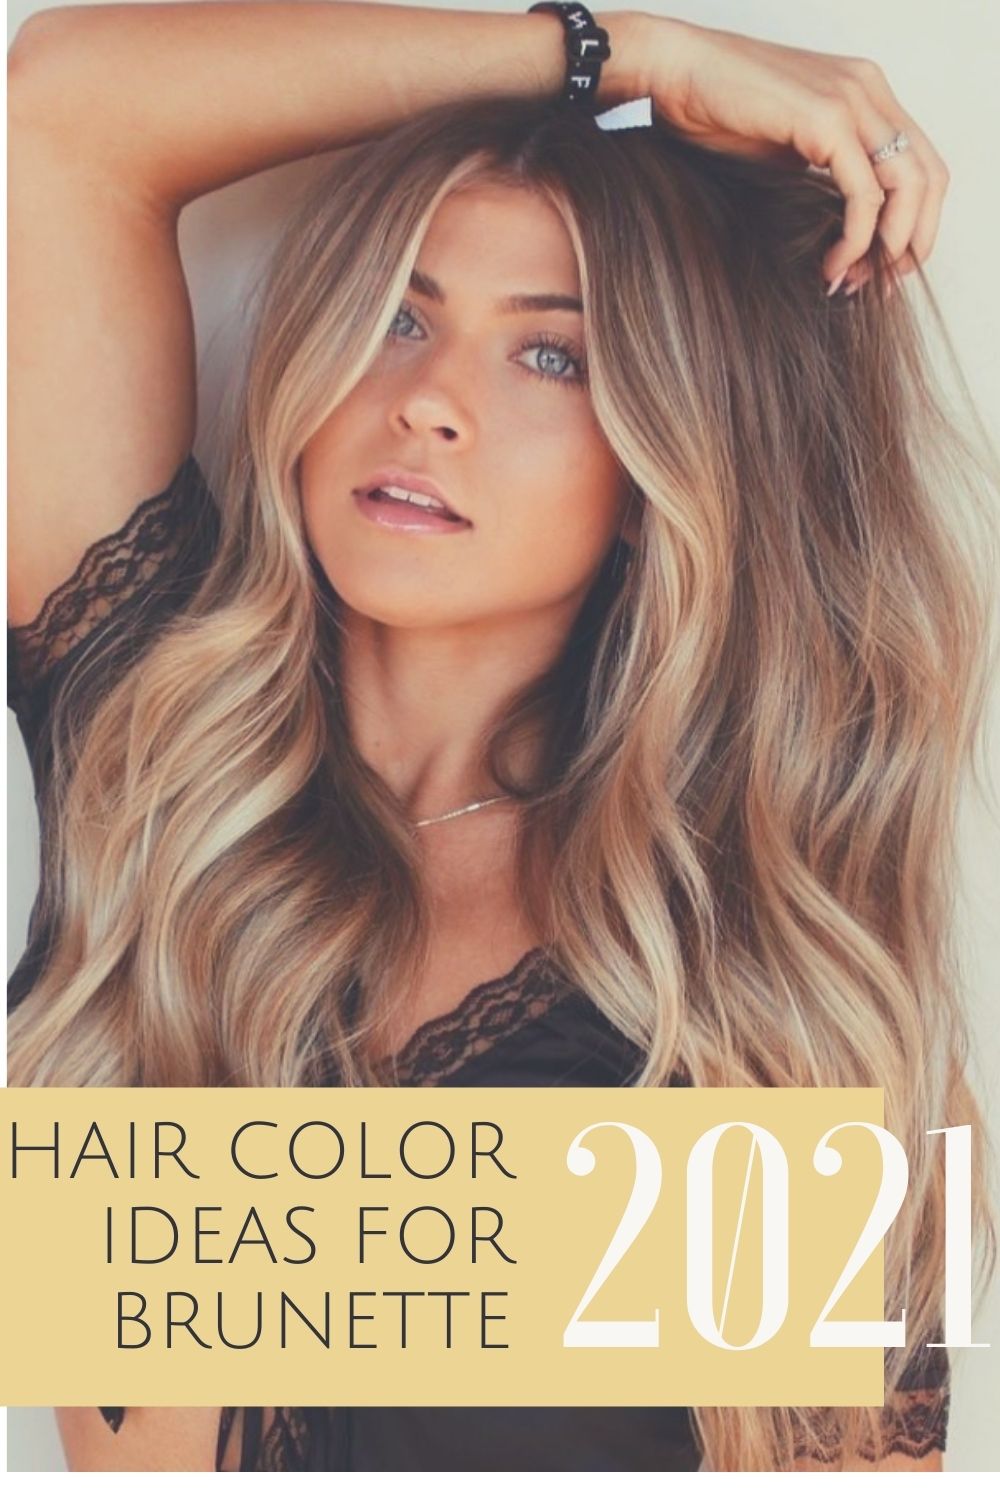 Summer hair color for brunette to get inspired for any hair length!